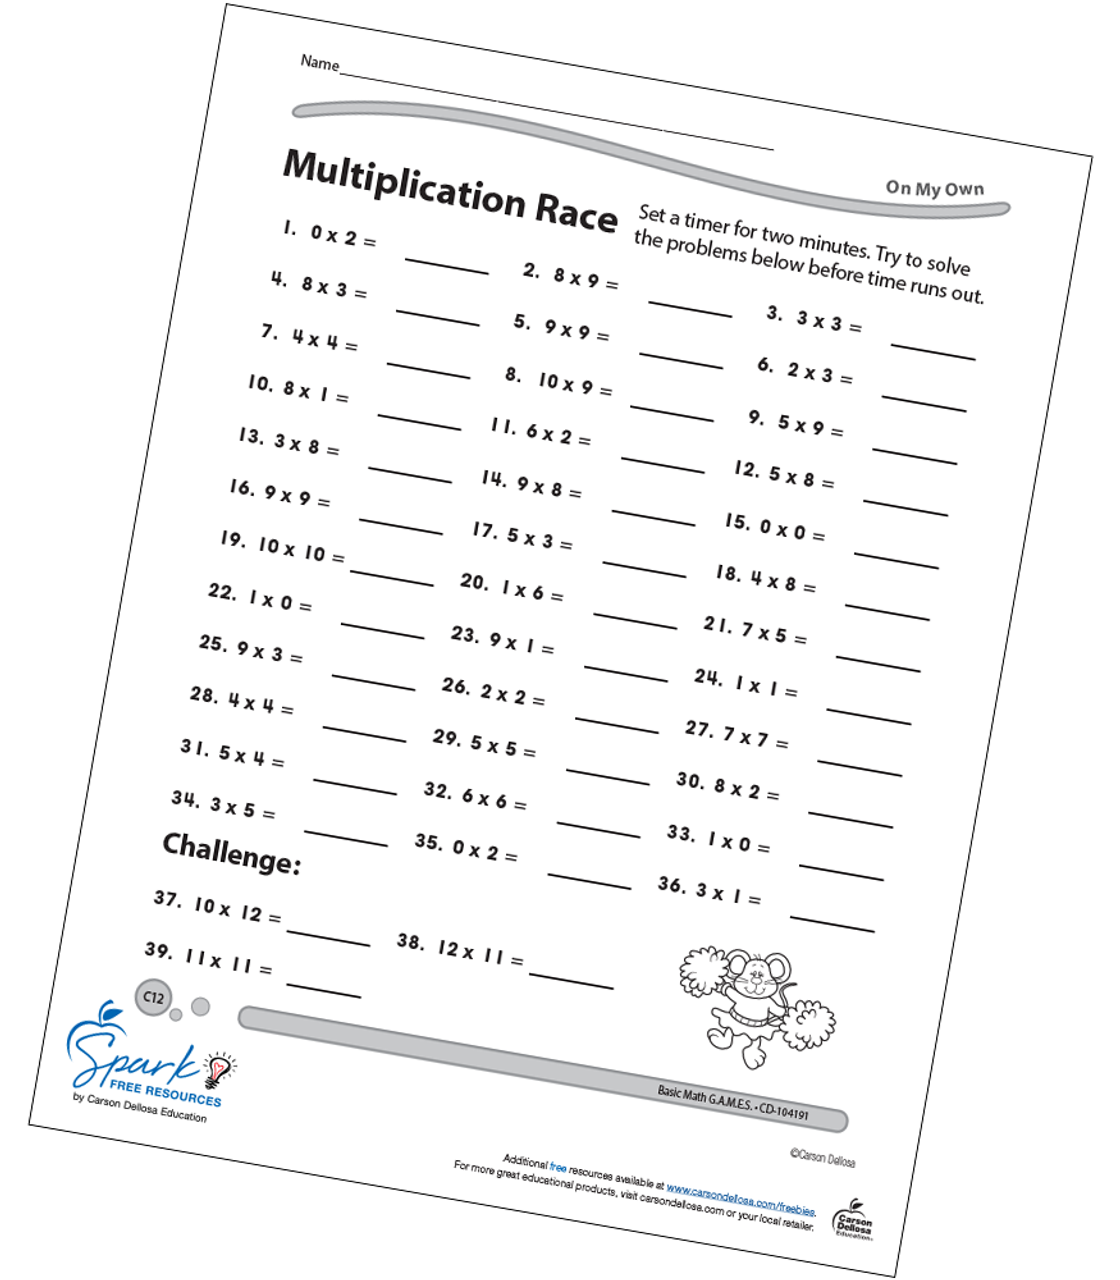 multiplication-race-free-printable-carson-dellosa